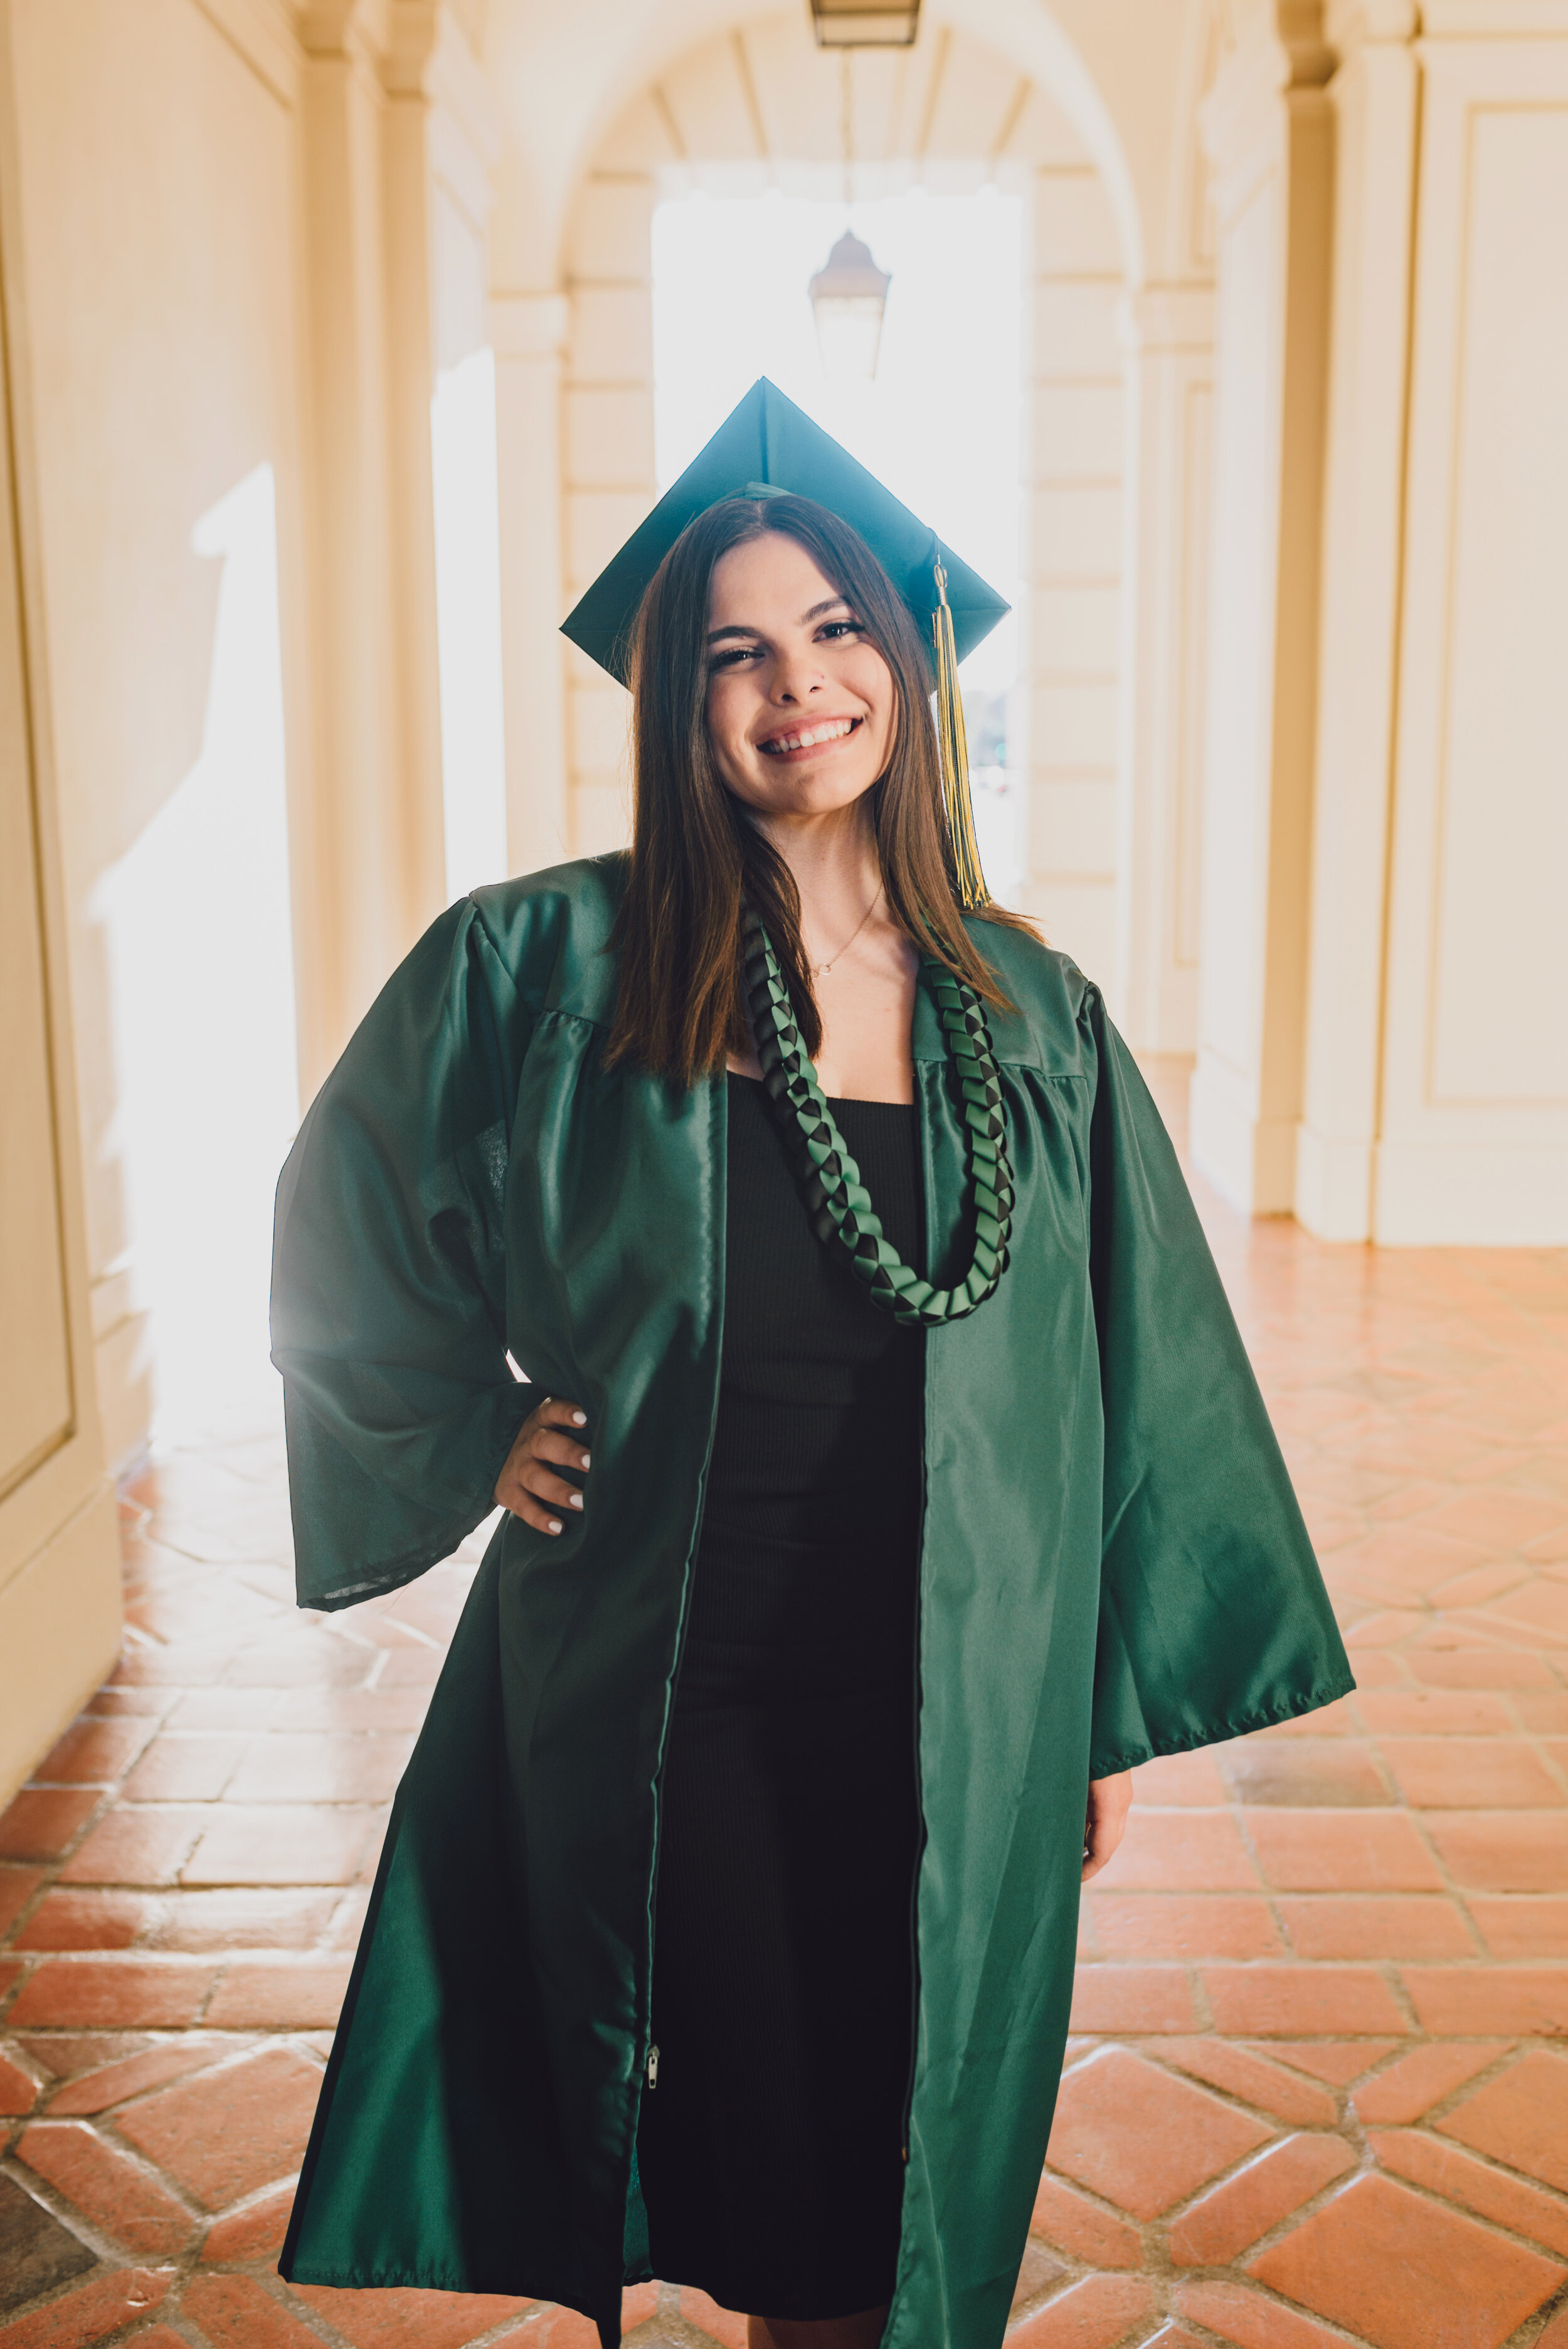 LosAngeles-Graduation-Portrait-Photographer-High-School-6.jpg